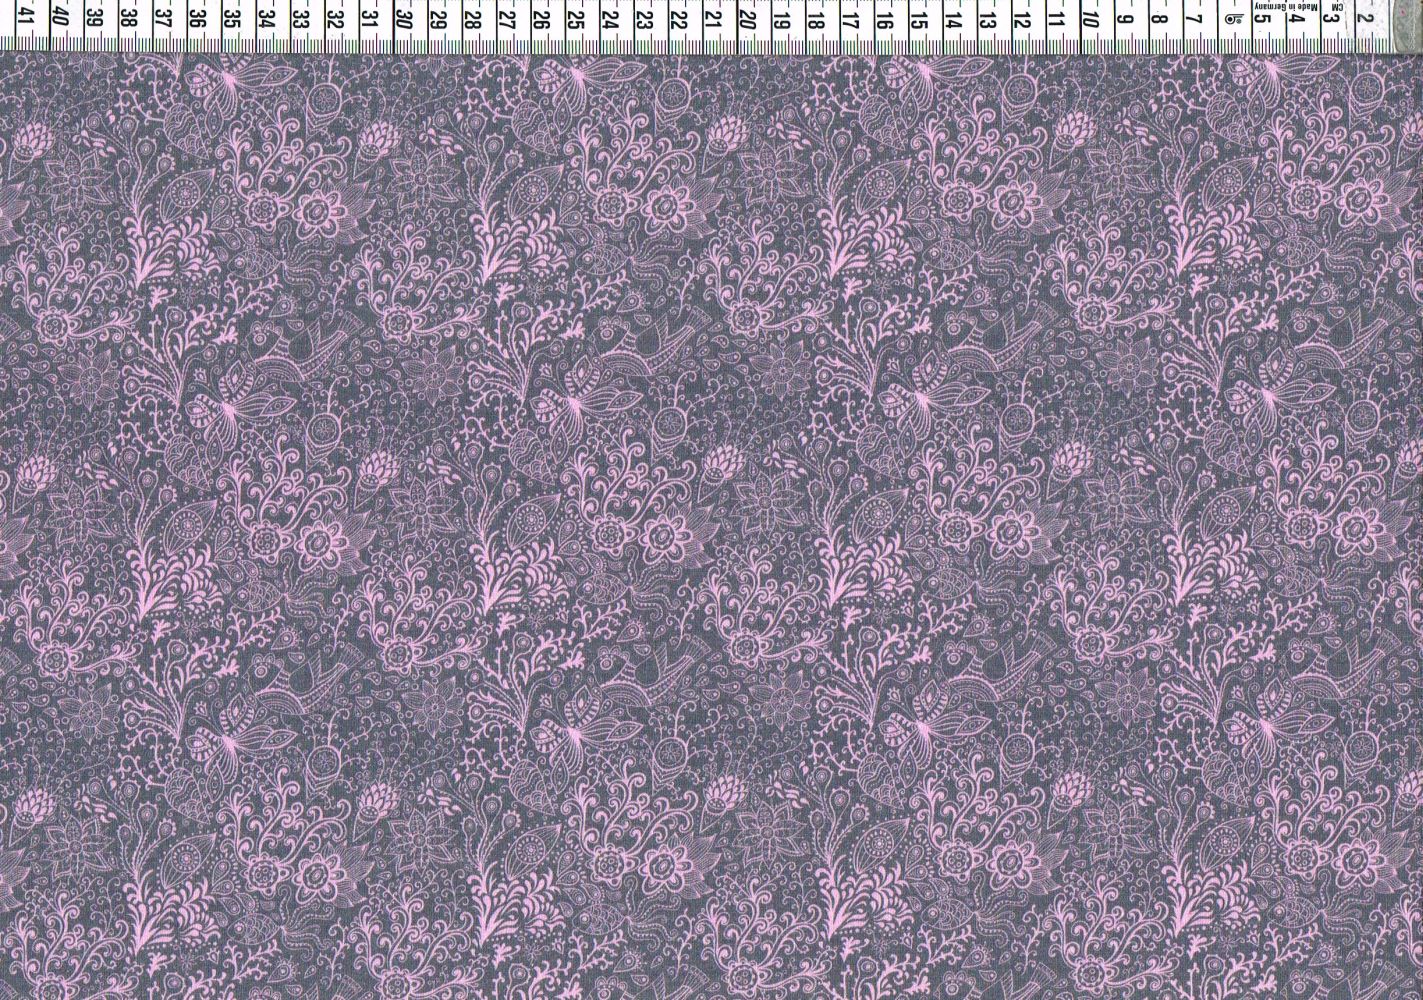 Baumwolljersey - Blumen grau rosa